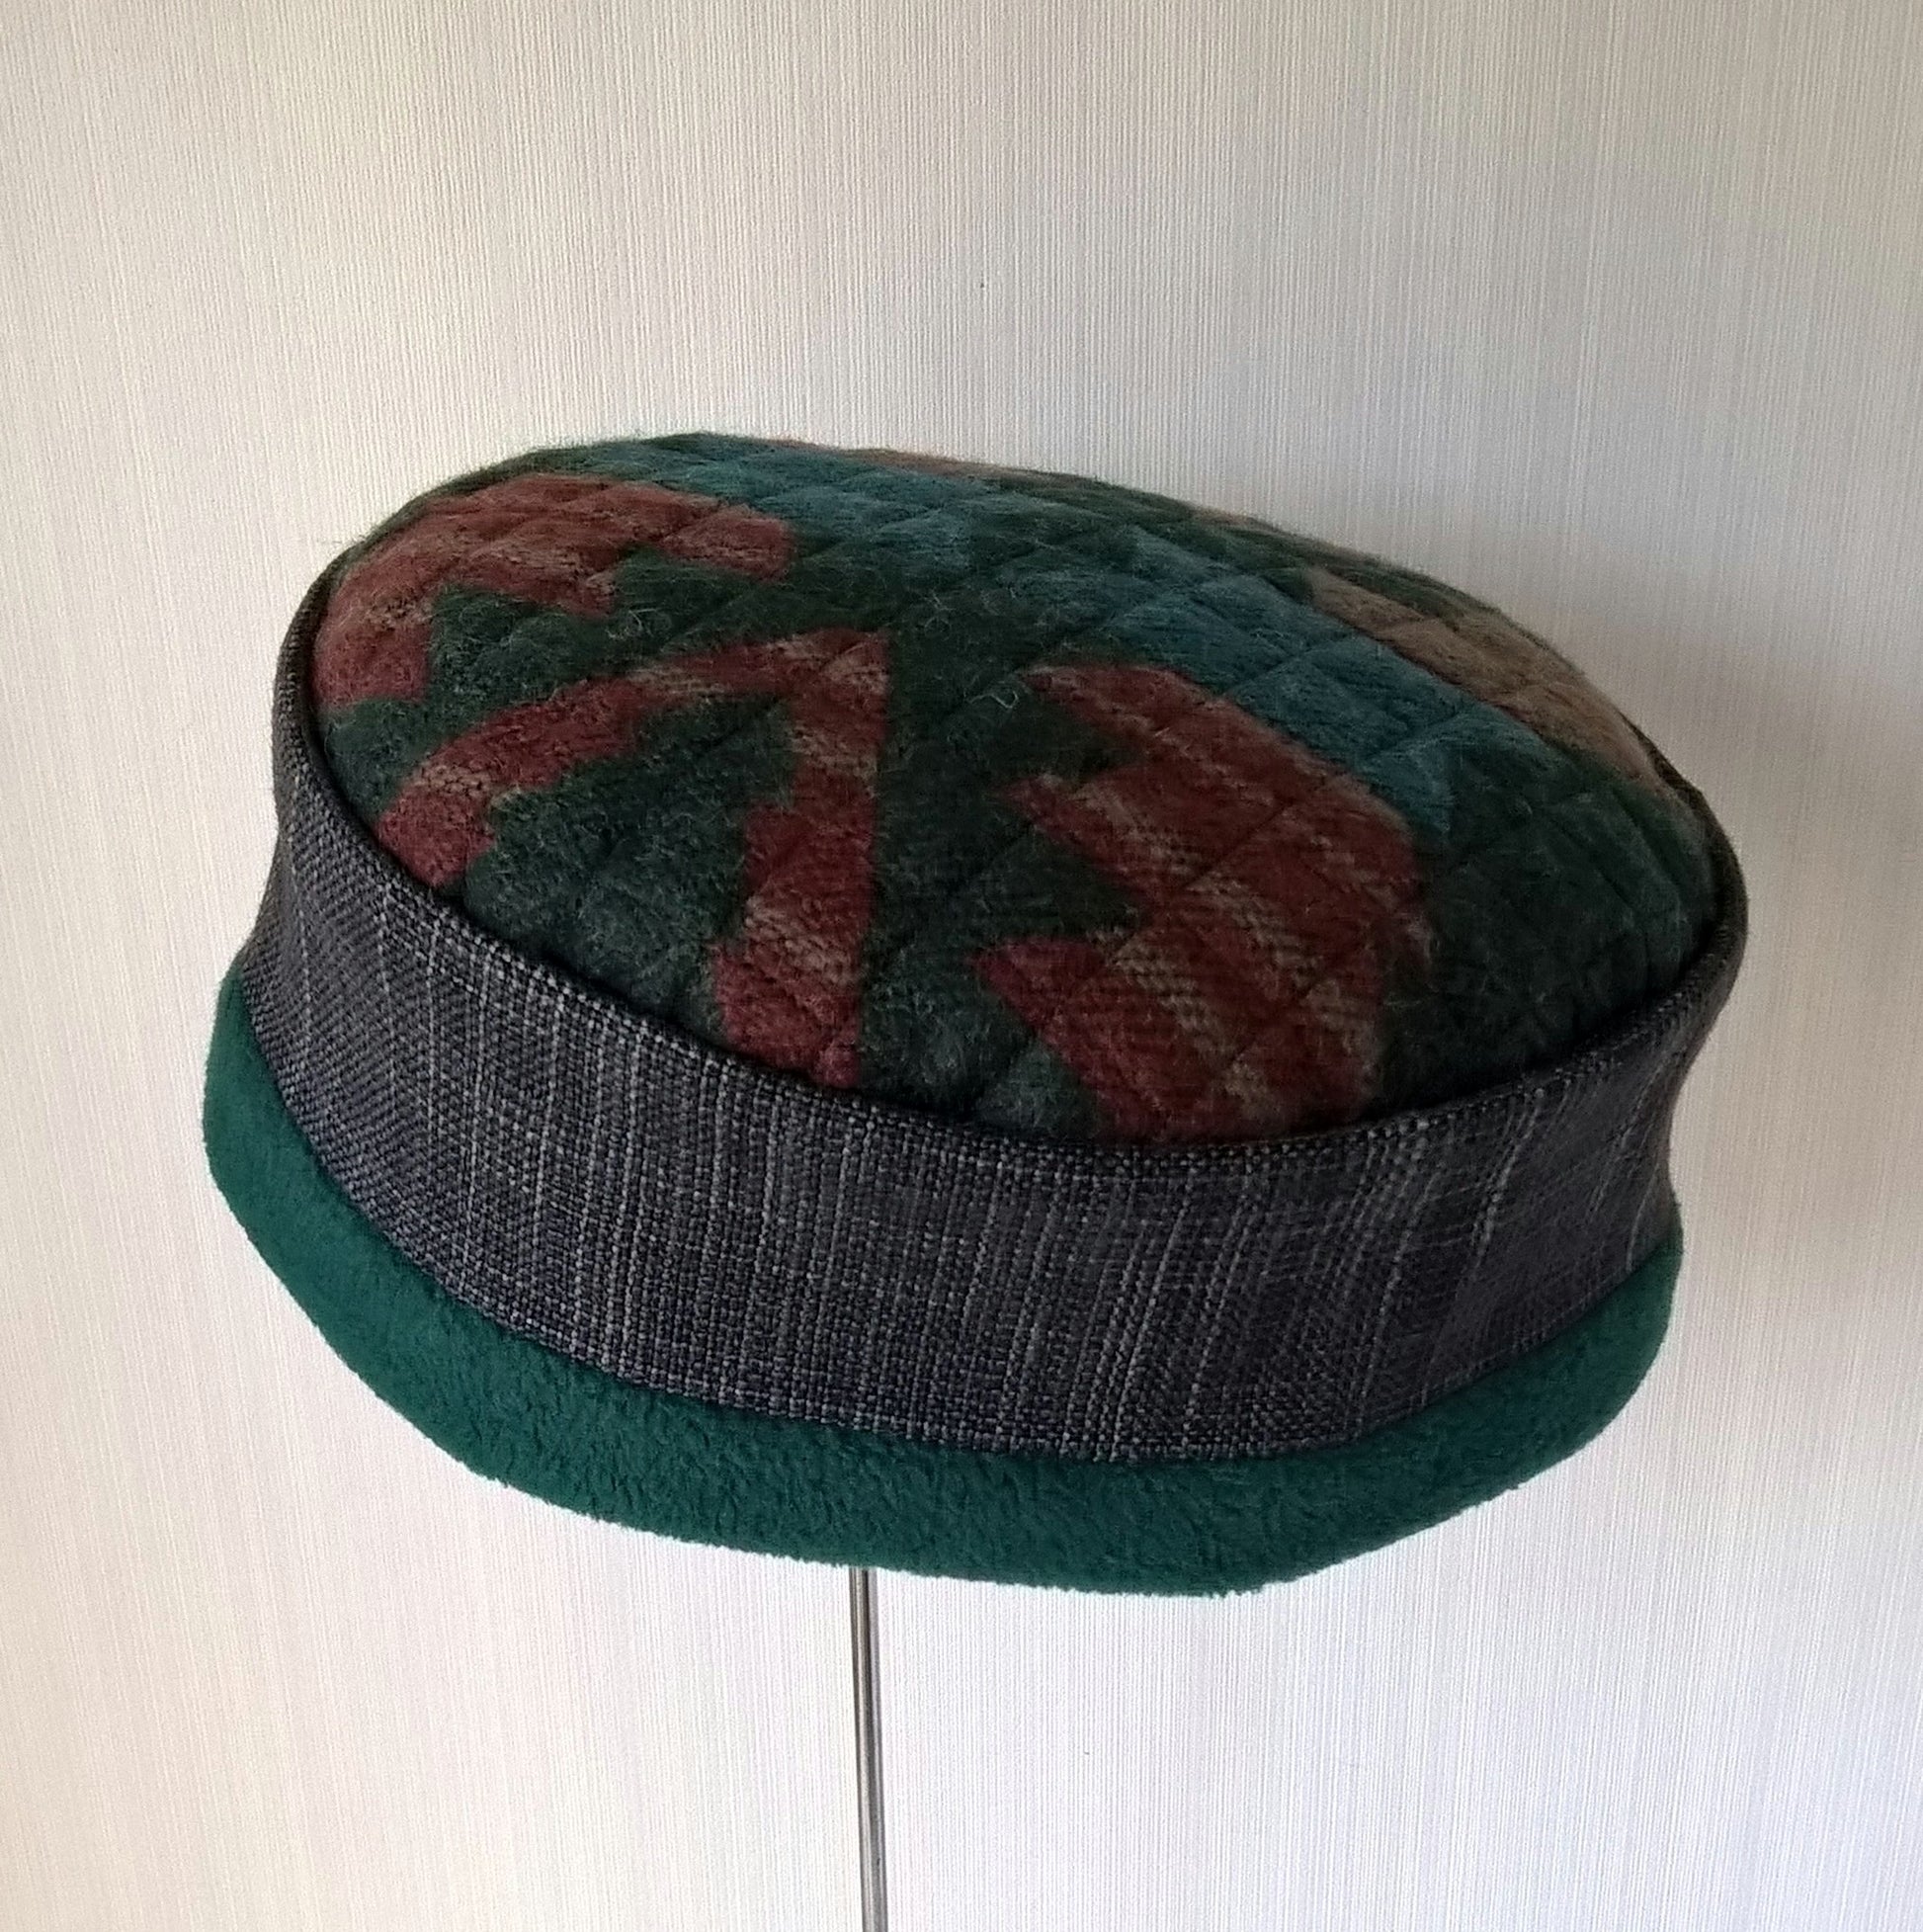 Aztec winter pillbox hat fleece lined in forest green